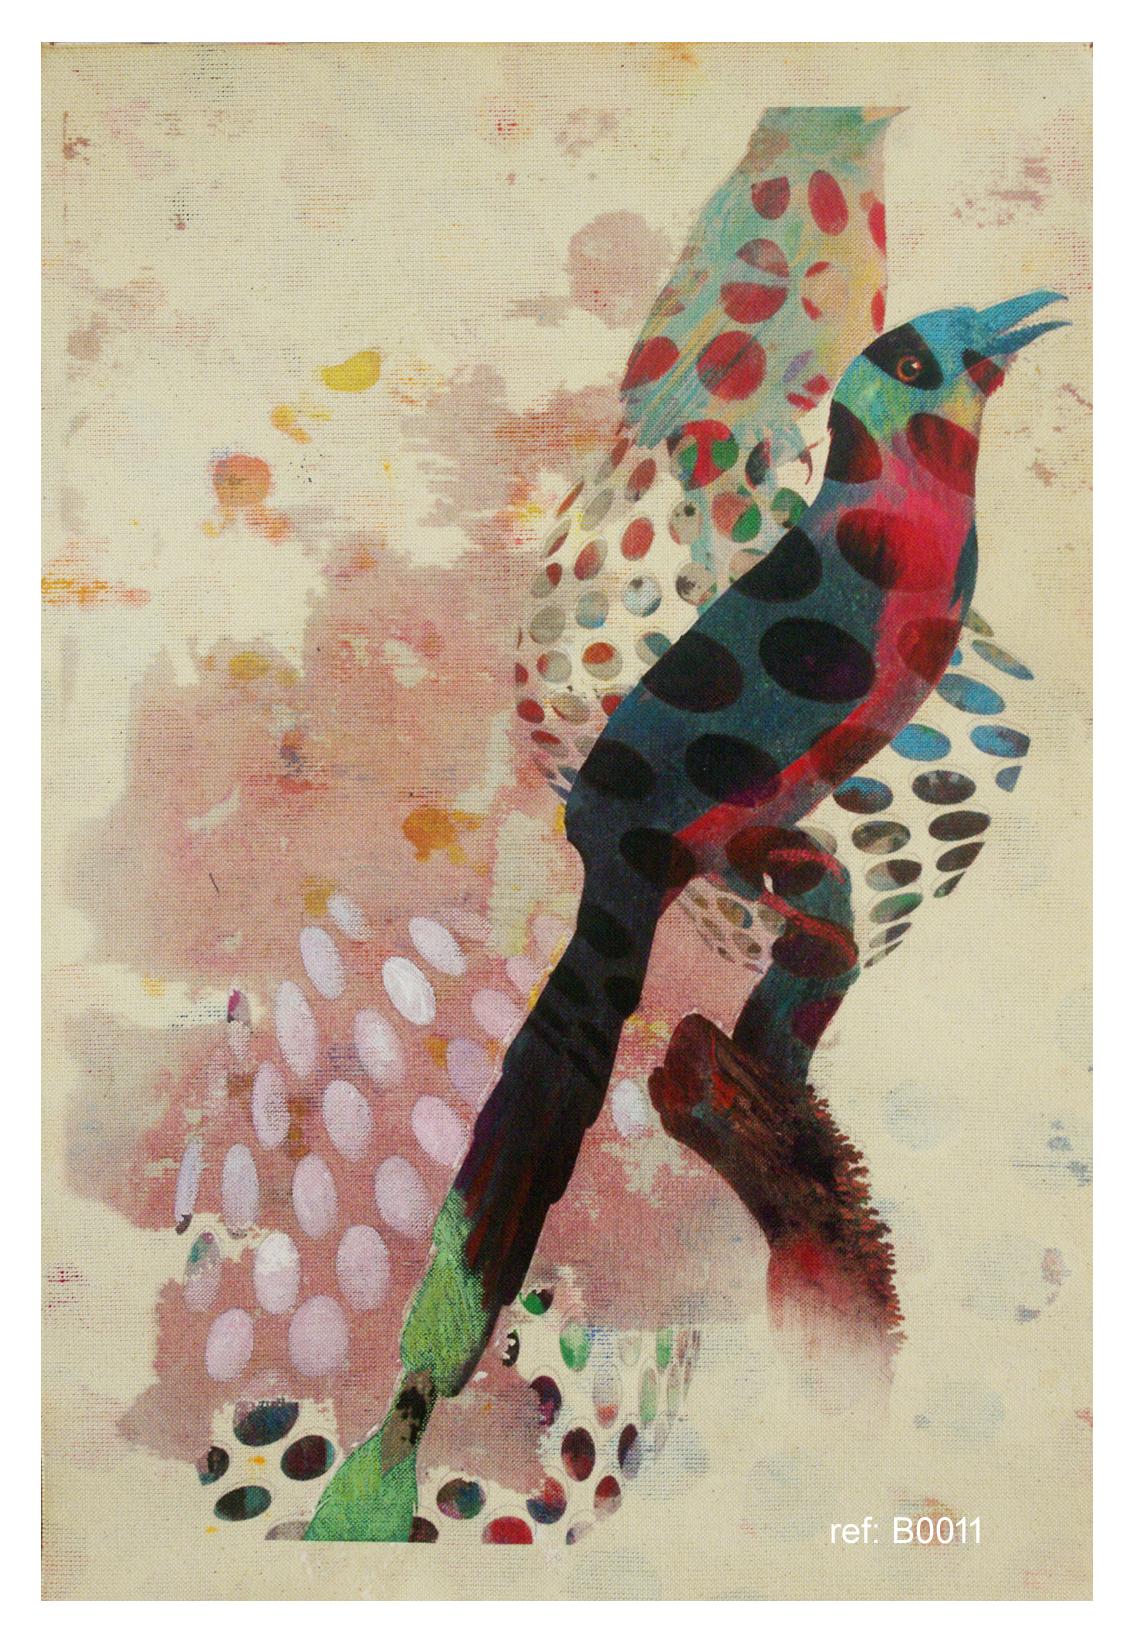 Birds 018- Contemporary, Abstract, Expressionist, Modern, Street art, Surrealist